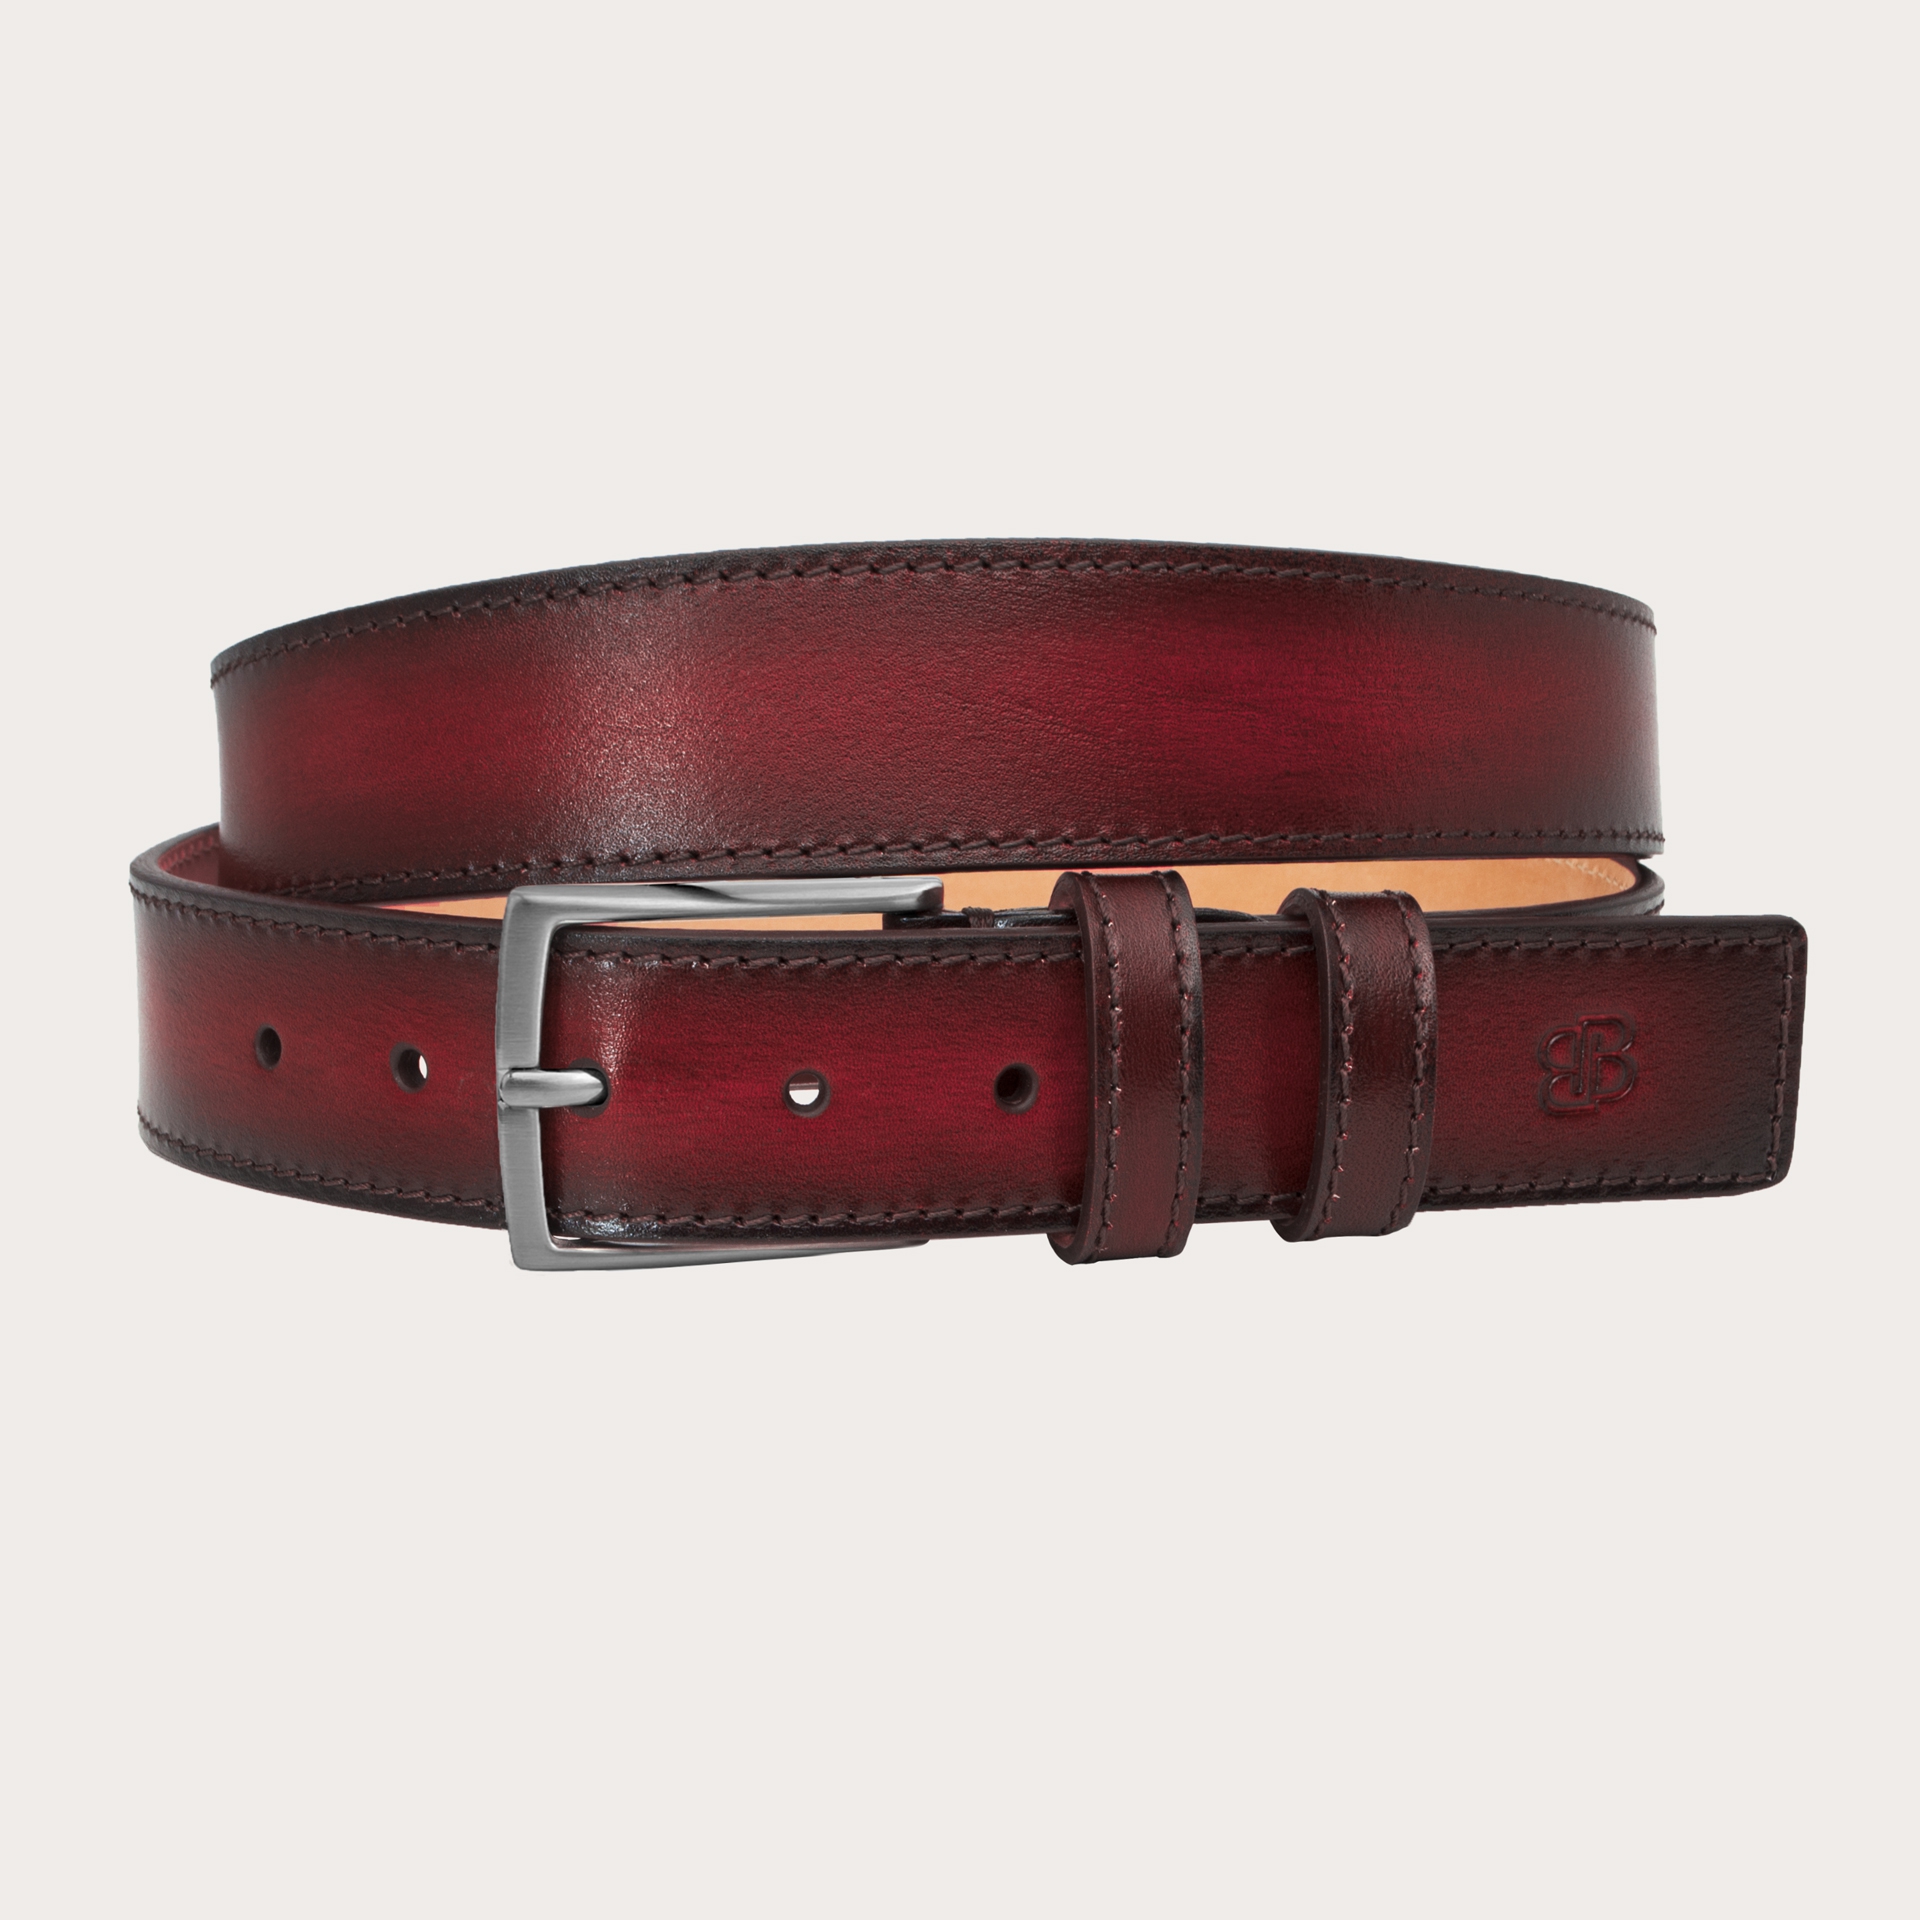 BRUCLE Elegante cinturón plano teñido a mano sin níquel, de color burdeos matizado marrón oscuro